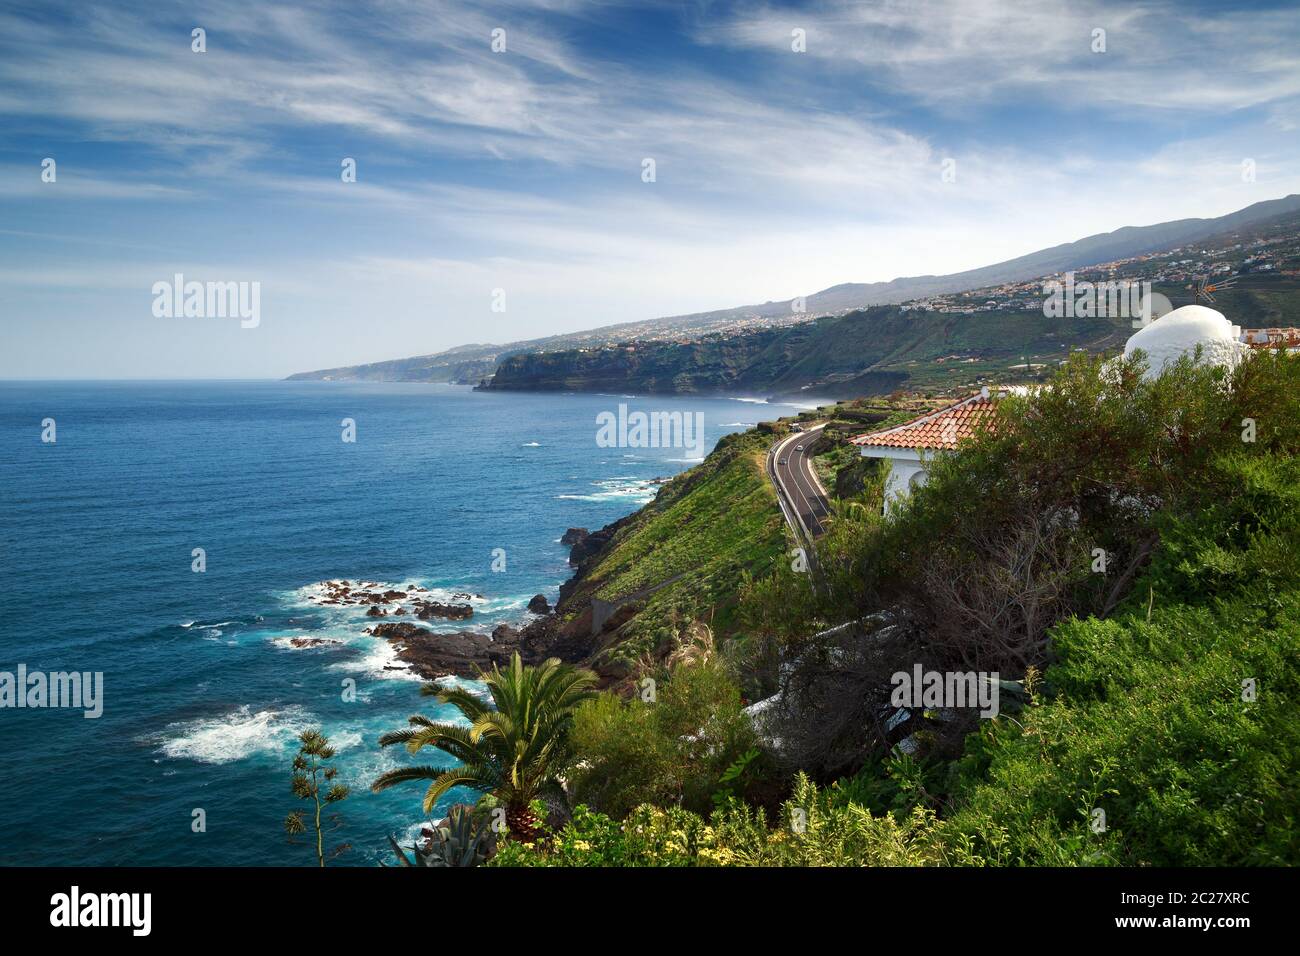 Coastline of the Atlantic ocean with mountains and road view in Puerto de la Cruz, one of the popular resort in the northern part of Tenerife island, Stock Photo